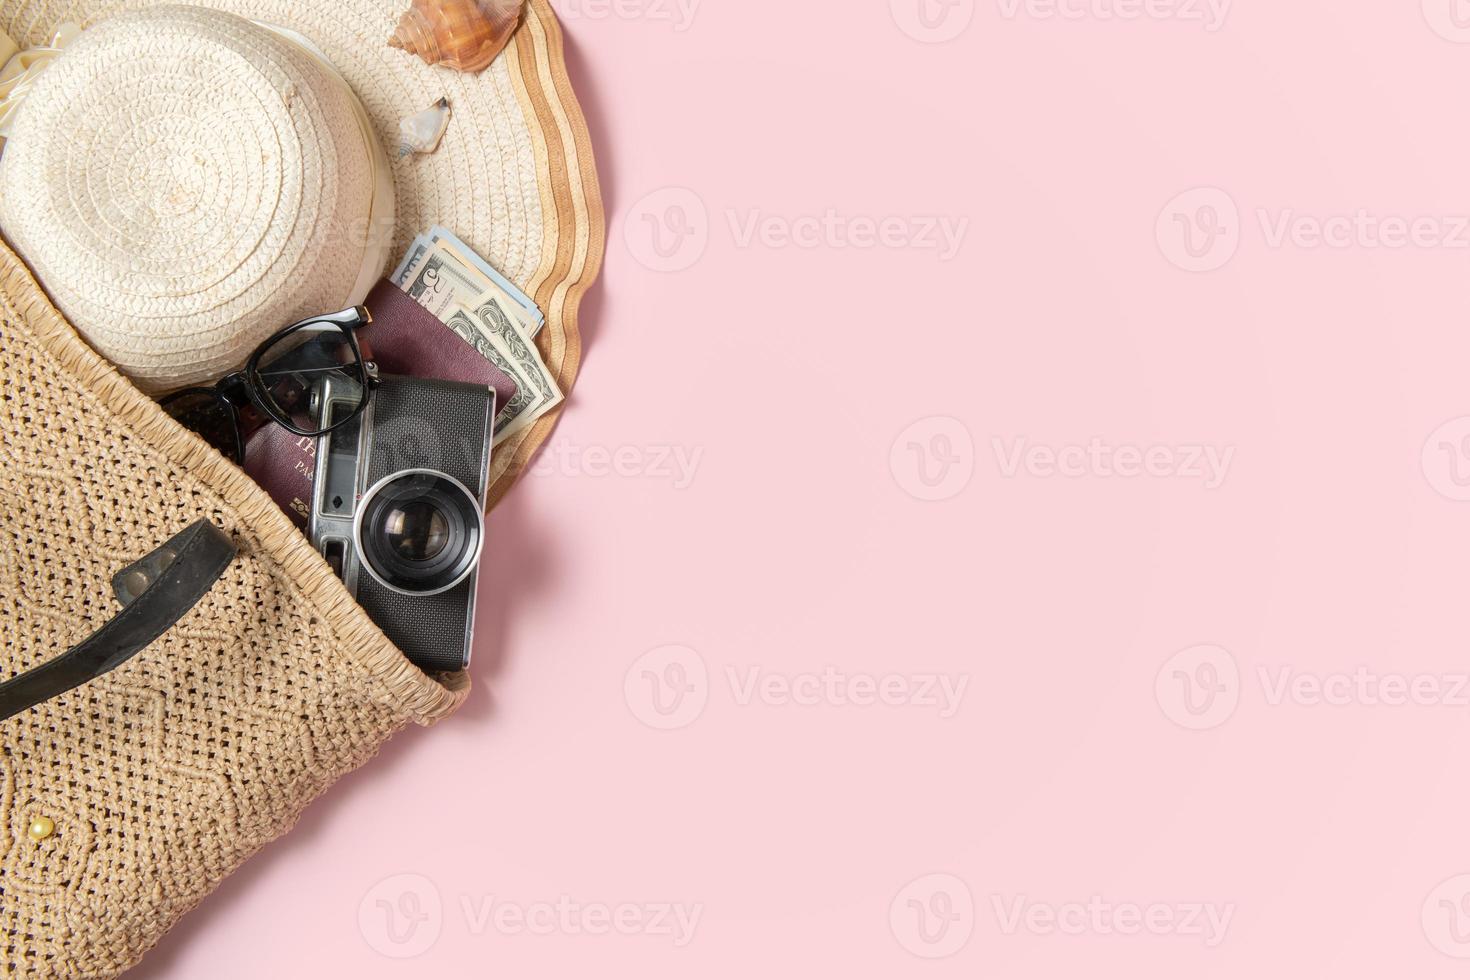 Traveler accessories, beach hat with retro film camera, sunglasses, money and passport in handmade knitted bag photo